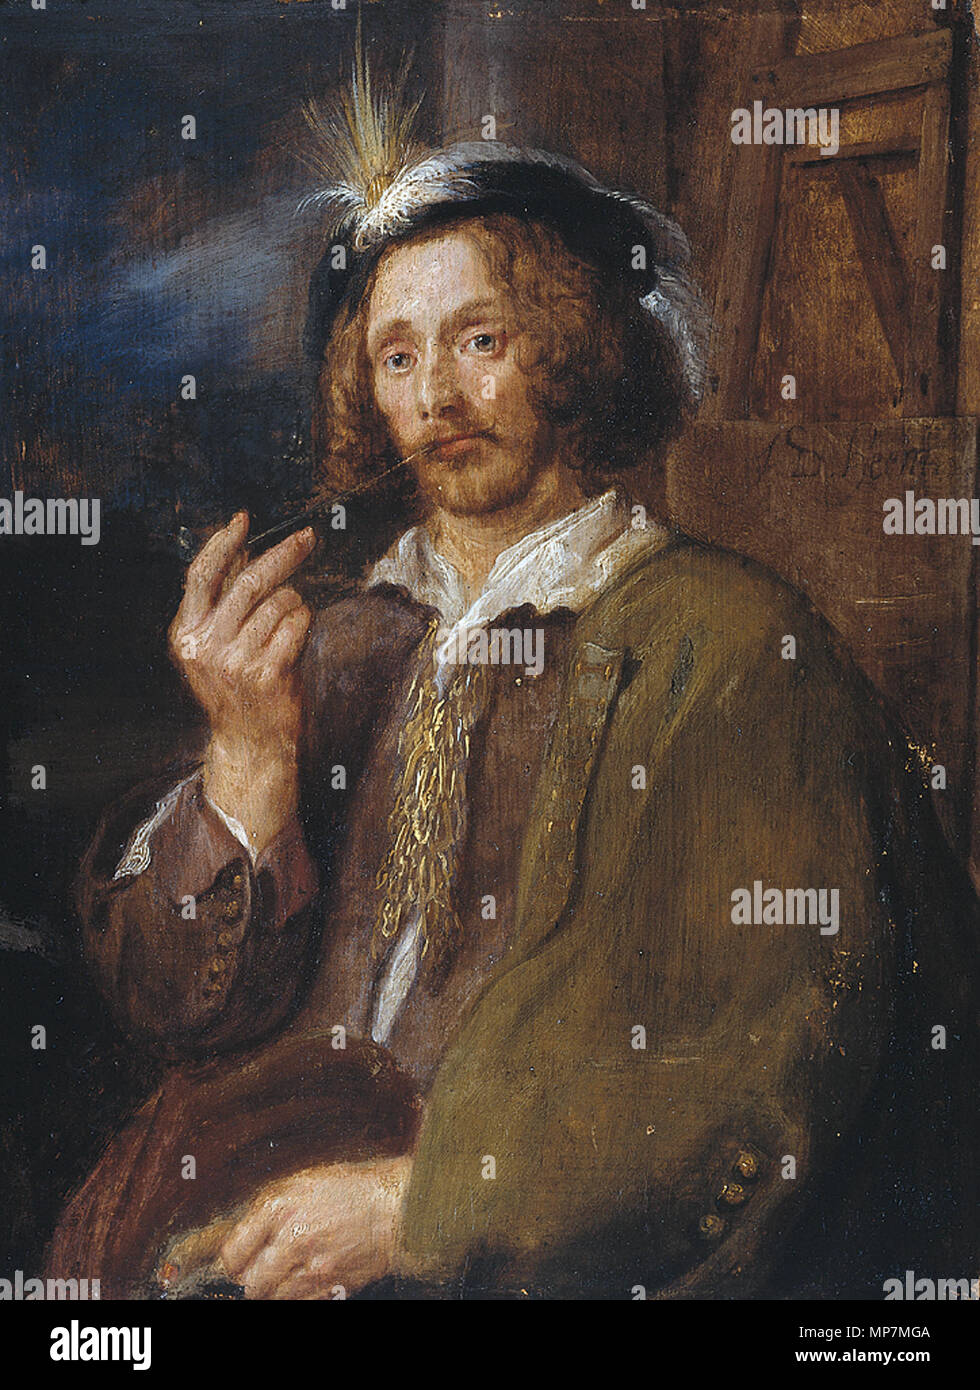 Jan Davidsz. de Heem (1606-1683/84).[1] Alternative title(s): Self portrait [old title].[2]  circa 1630-1635 (1630-1650).   696 Jan Davidsz. de Heem Self-portrait 1630-1650 Stock Photo